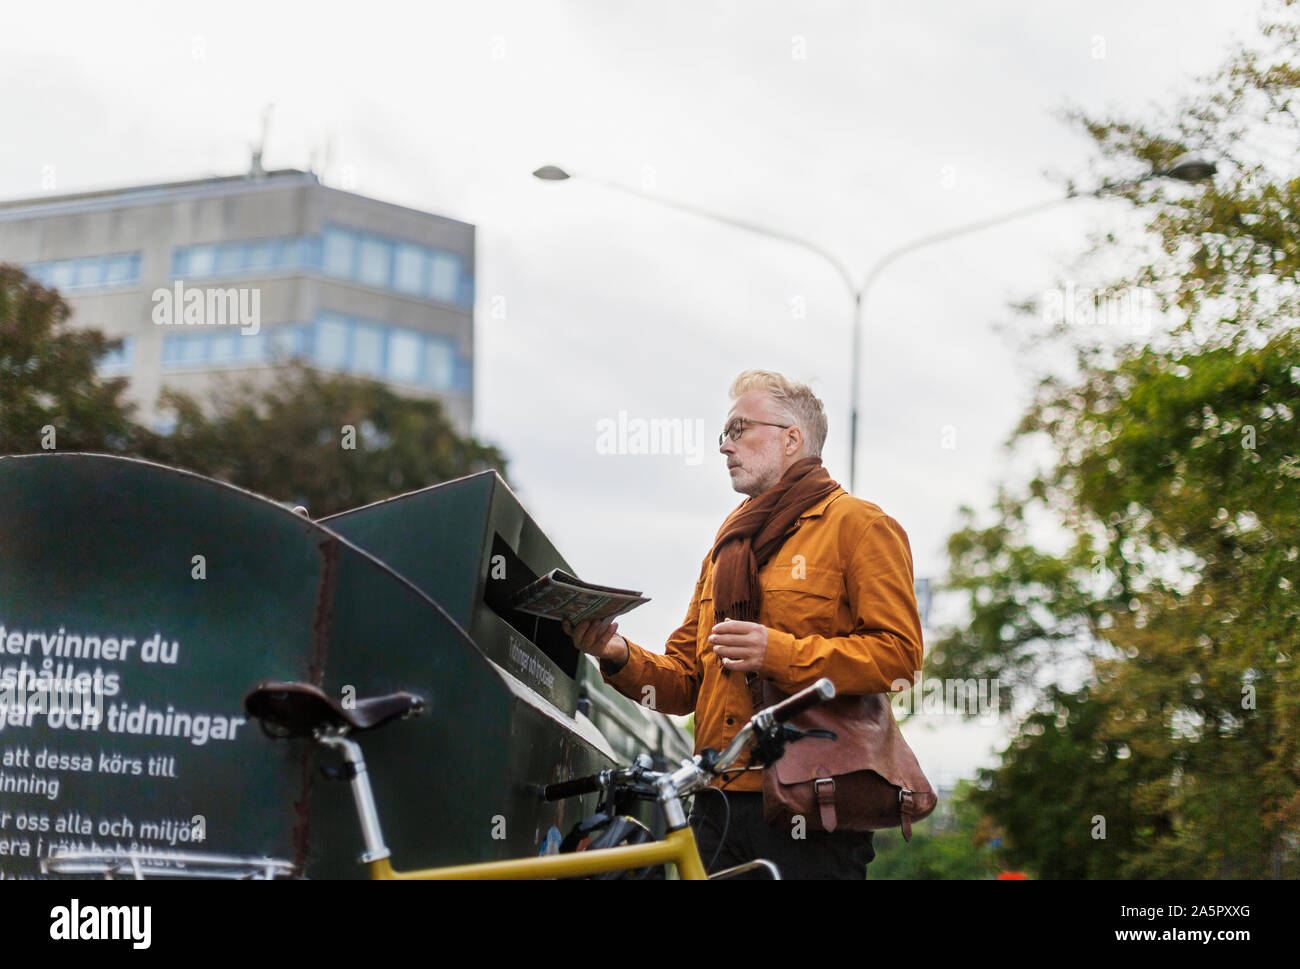 Man putting newspaper into recycling bin Stock Photo